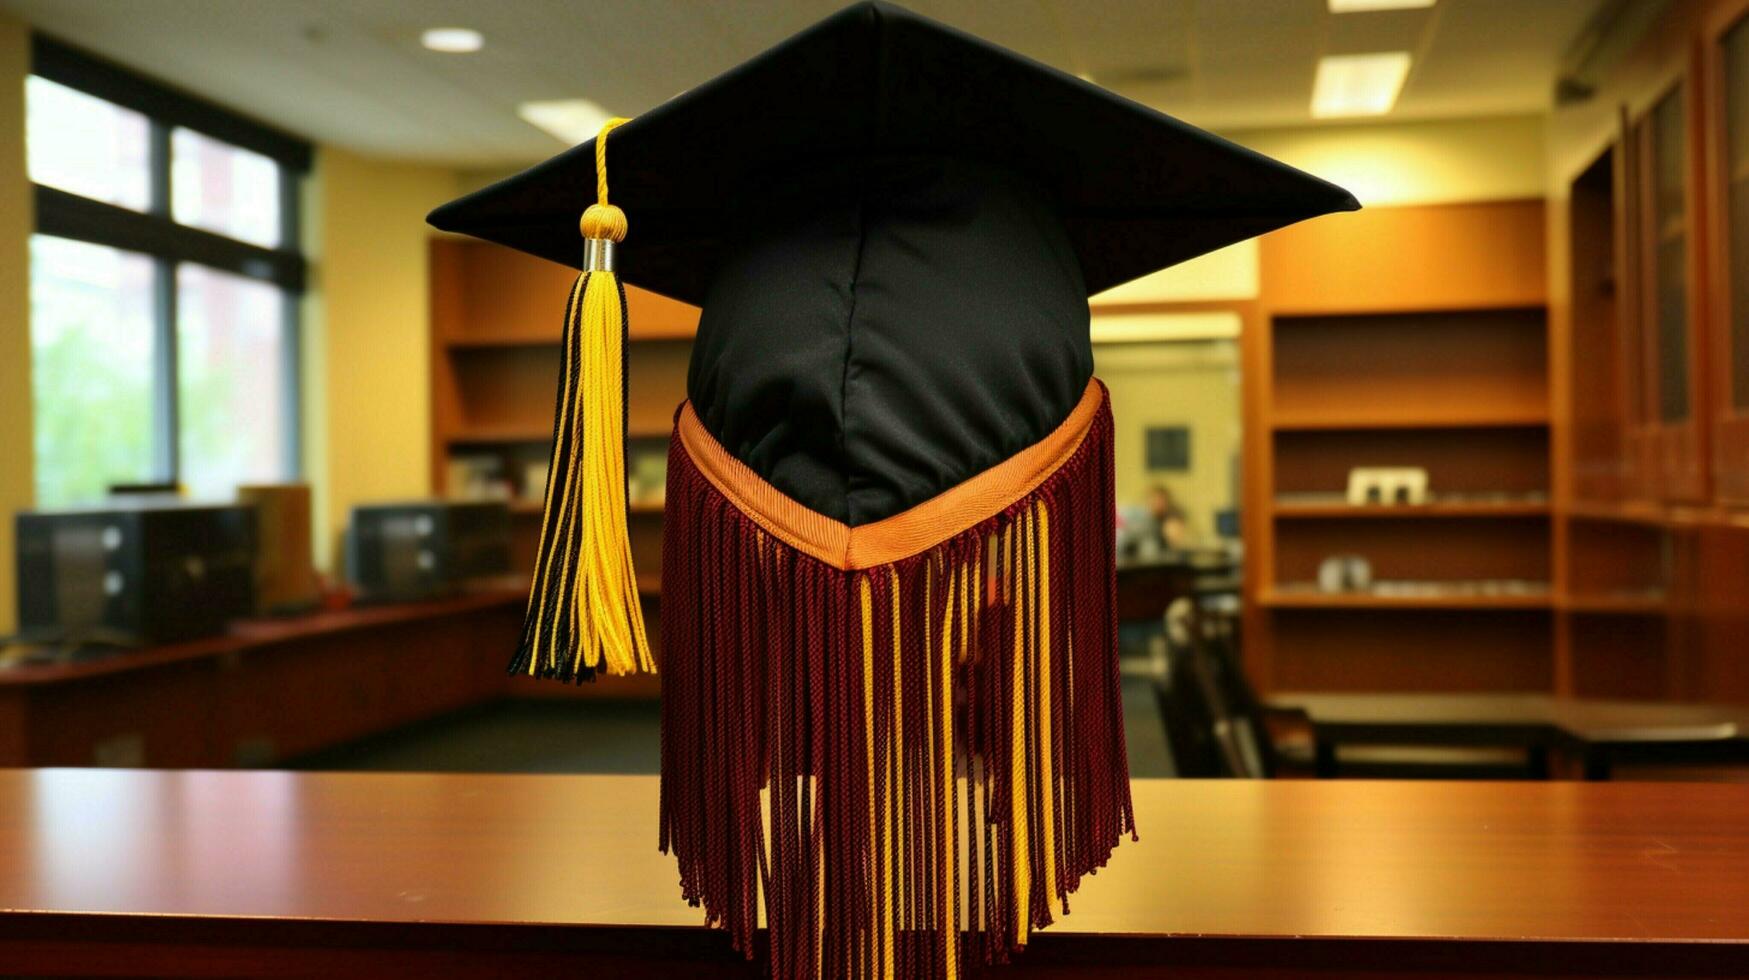 graduation gown cap tassel success achieved photo